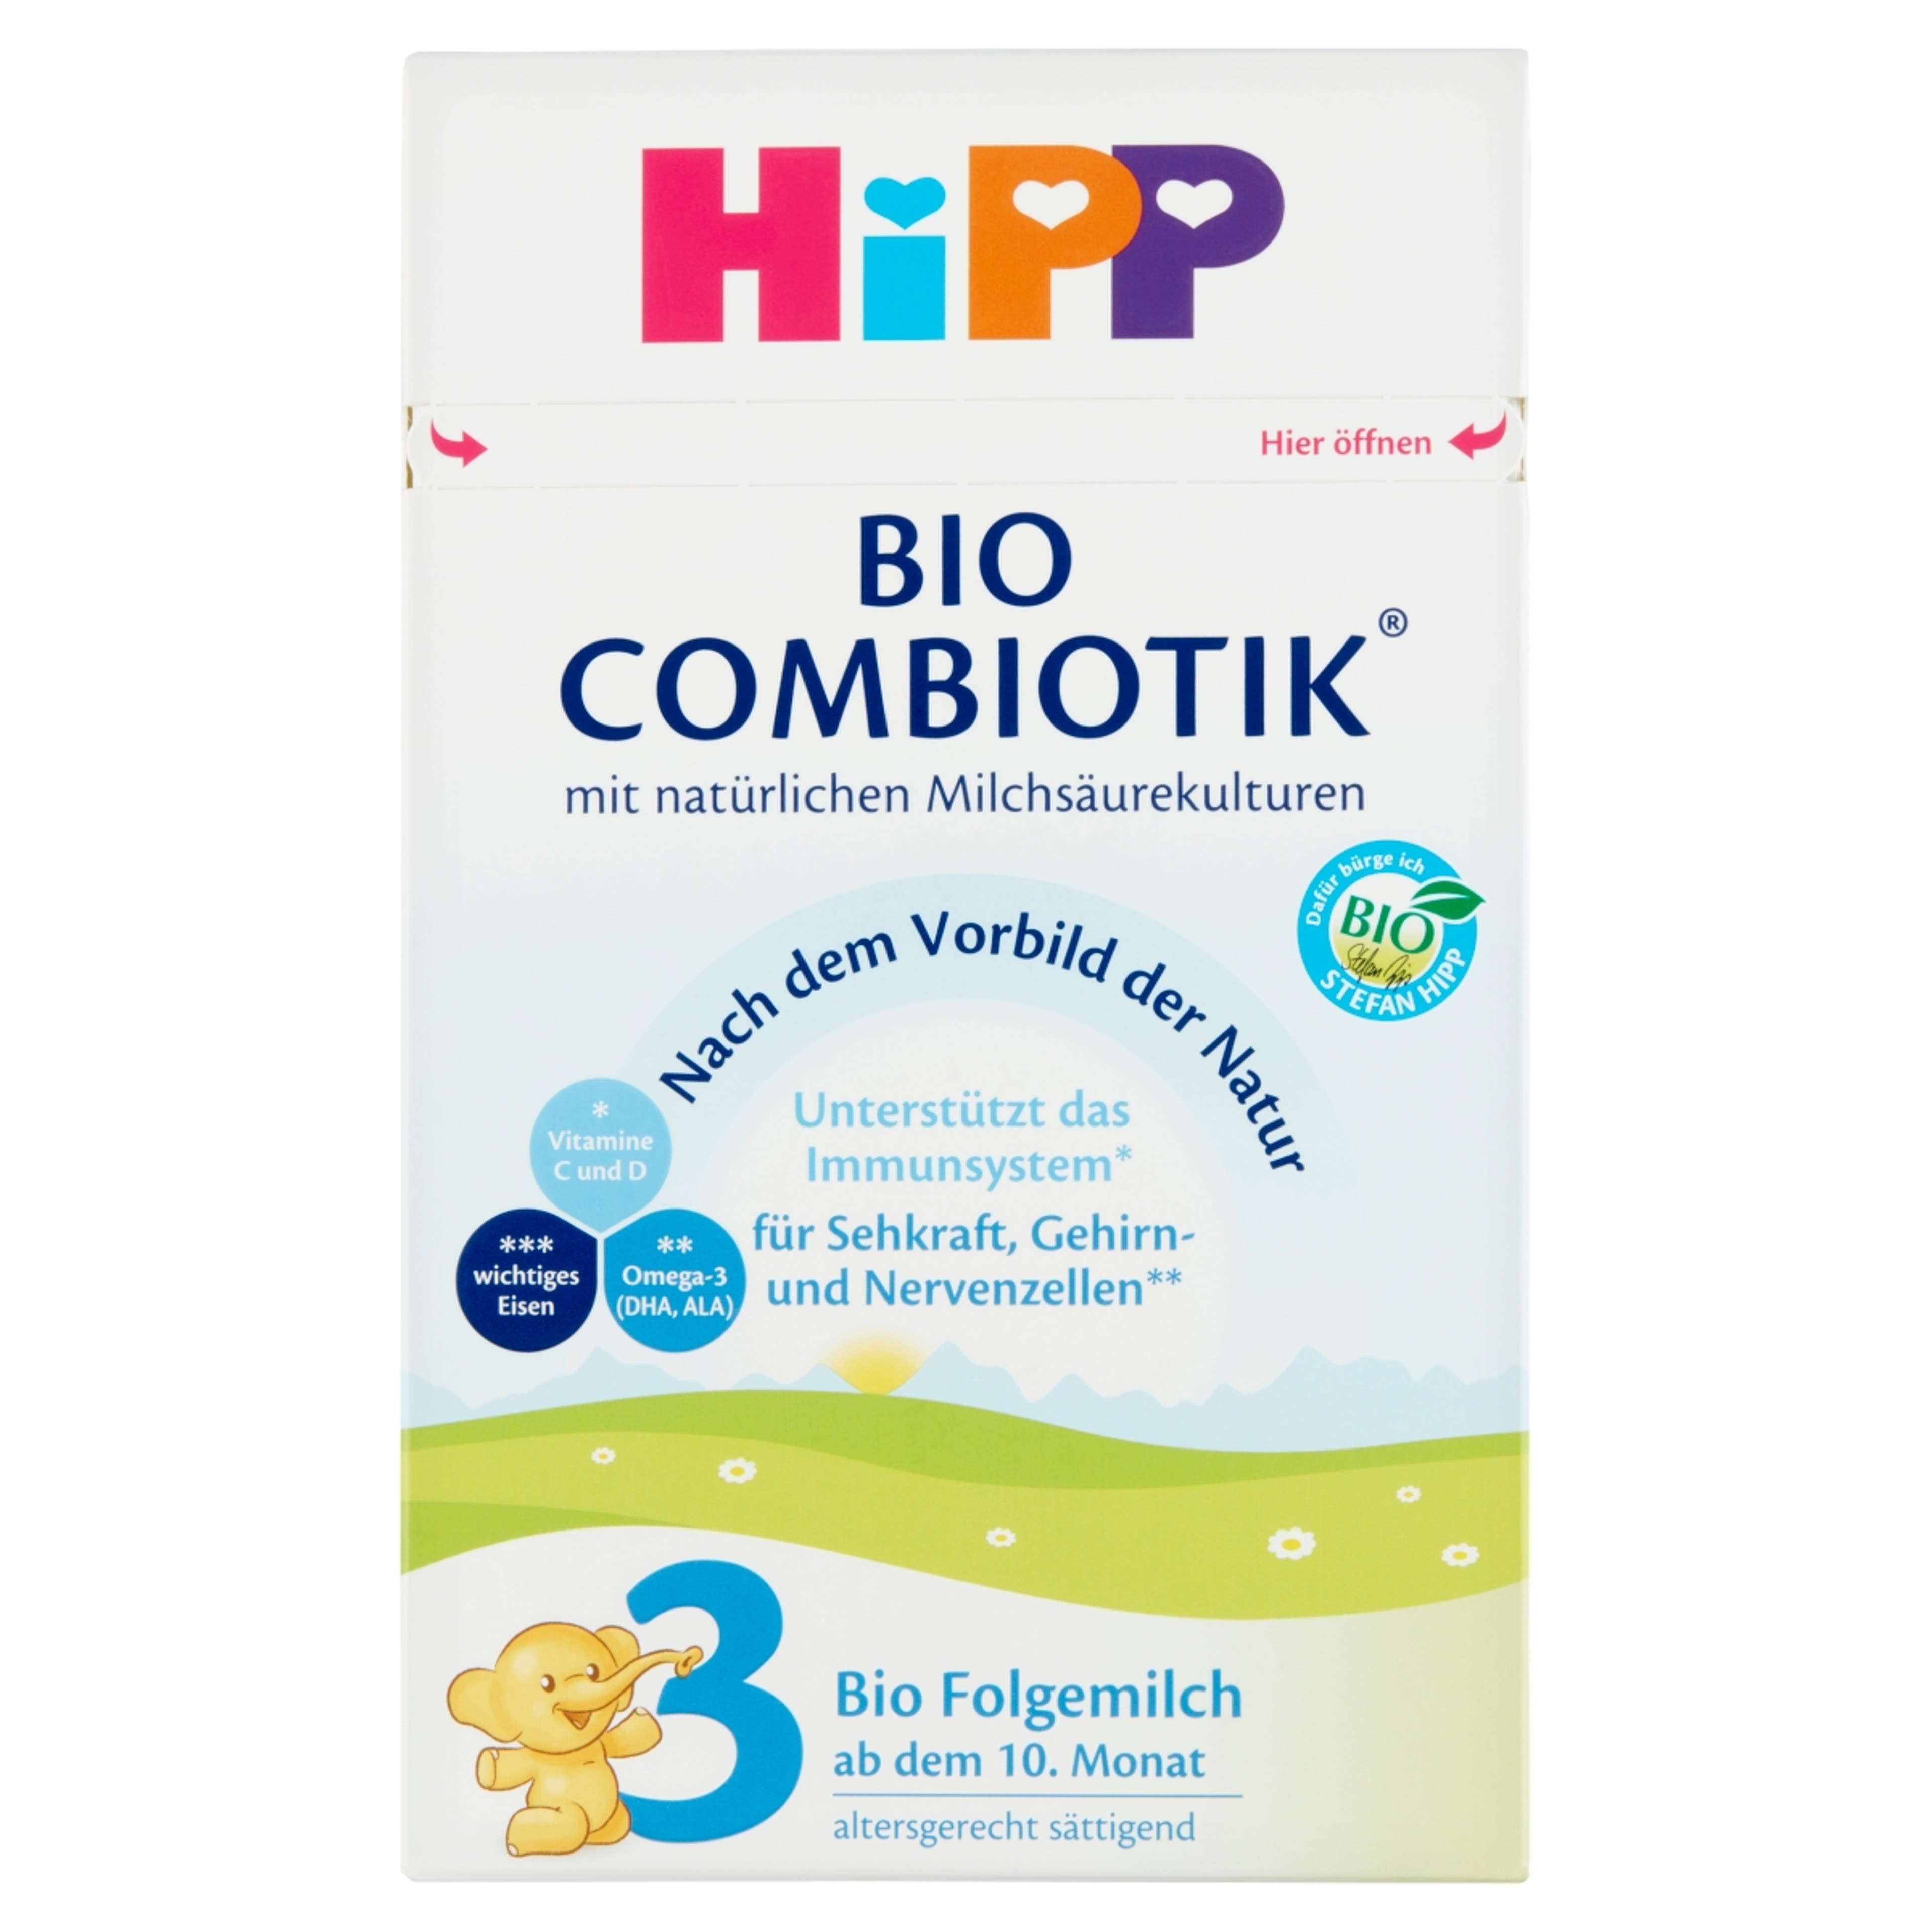 Hipp Bio Combiotik Tápszer 10 Hónapos Kortól - 600 g